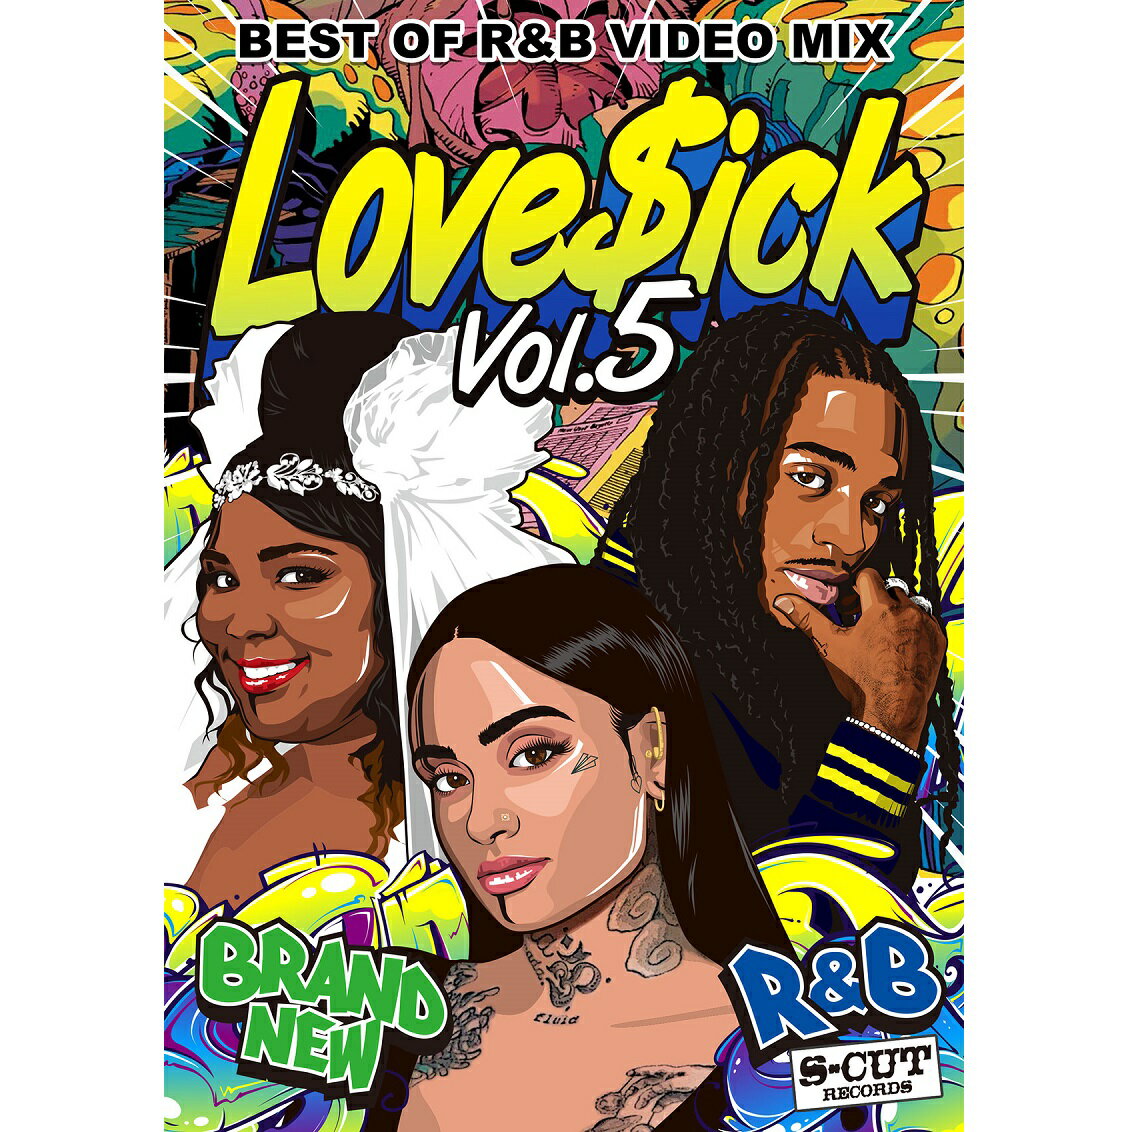 V.A / Lovesick -Best Of R&B Video Mix- Vol.5